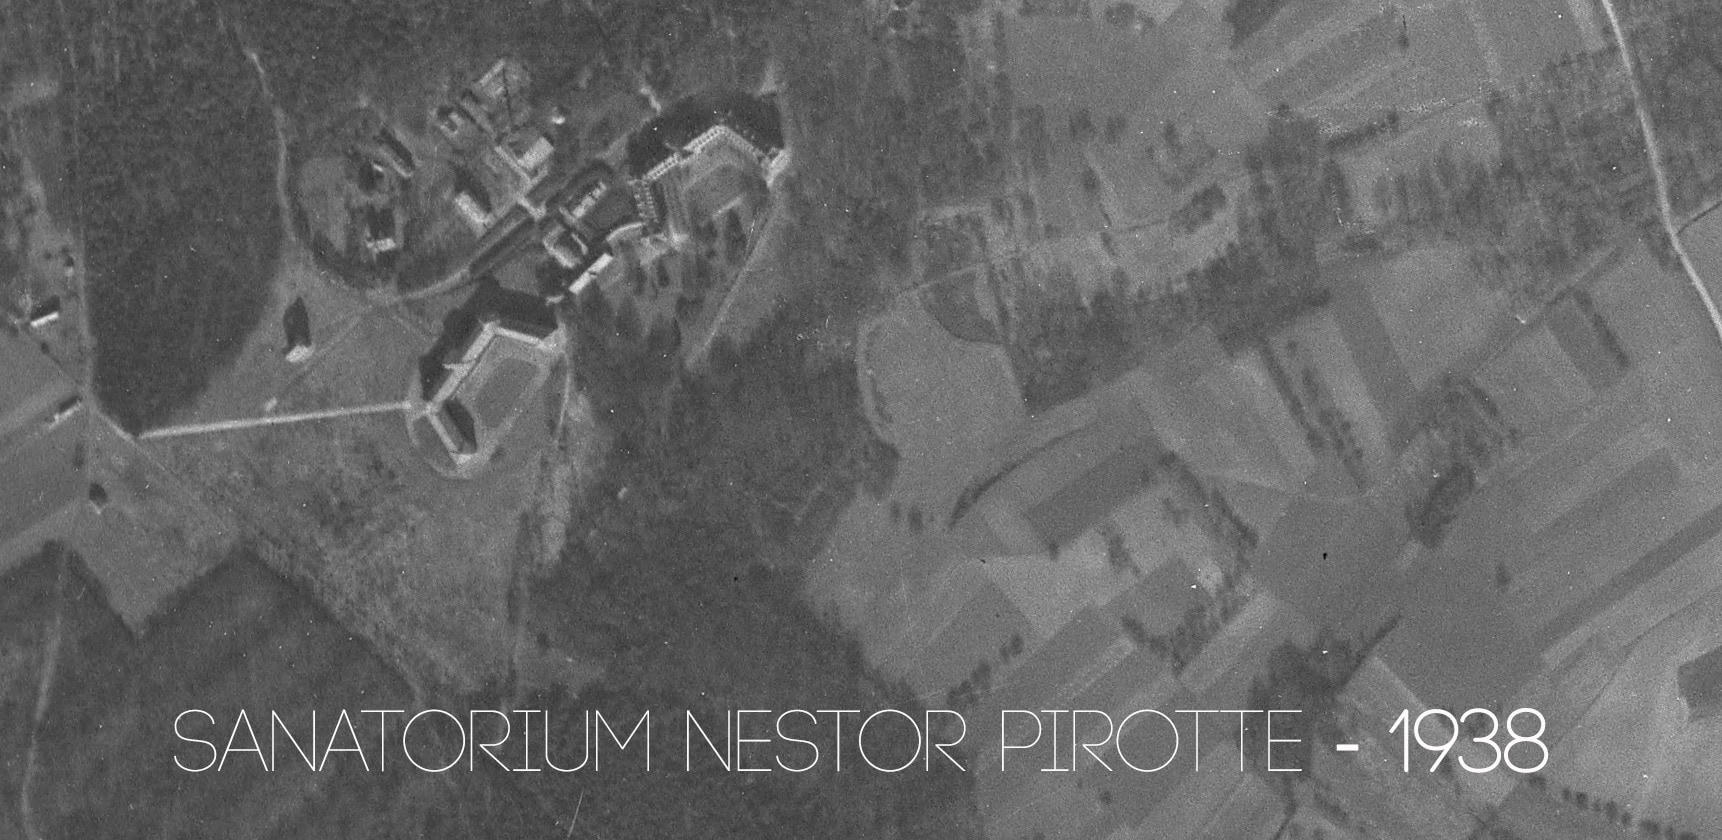 sanatorium-nestor-pirotte-map1938